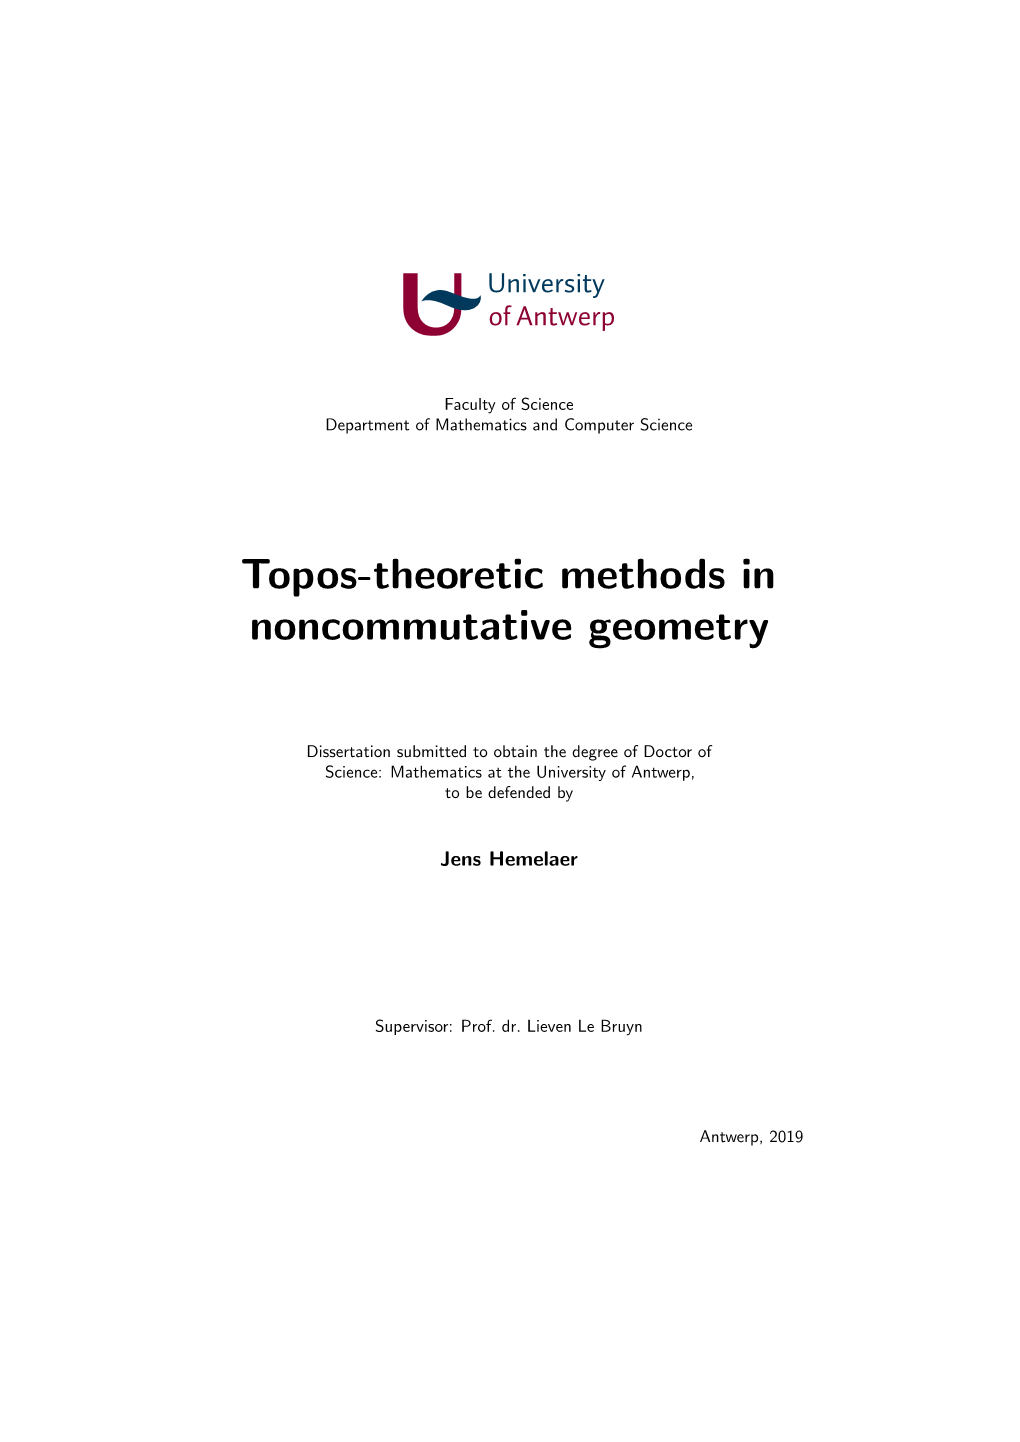 Topos-Theoretic Methods in Noncommutative Geometry